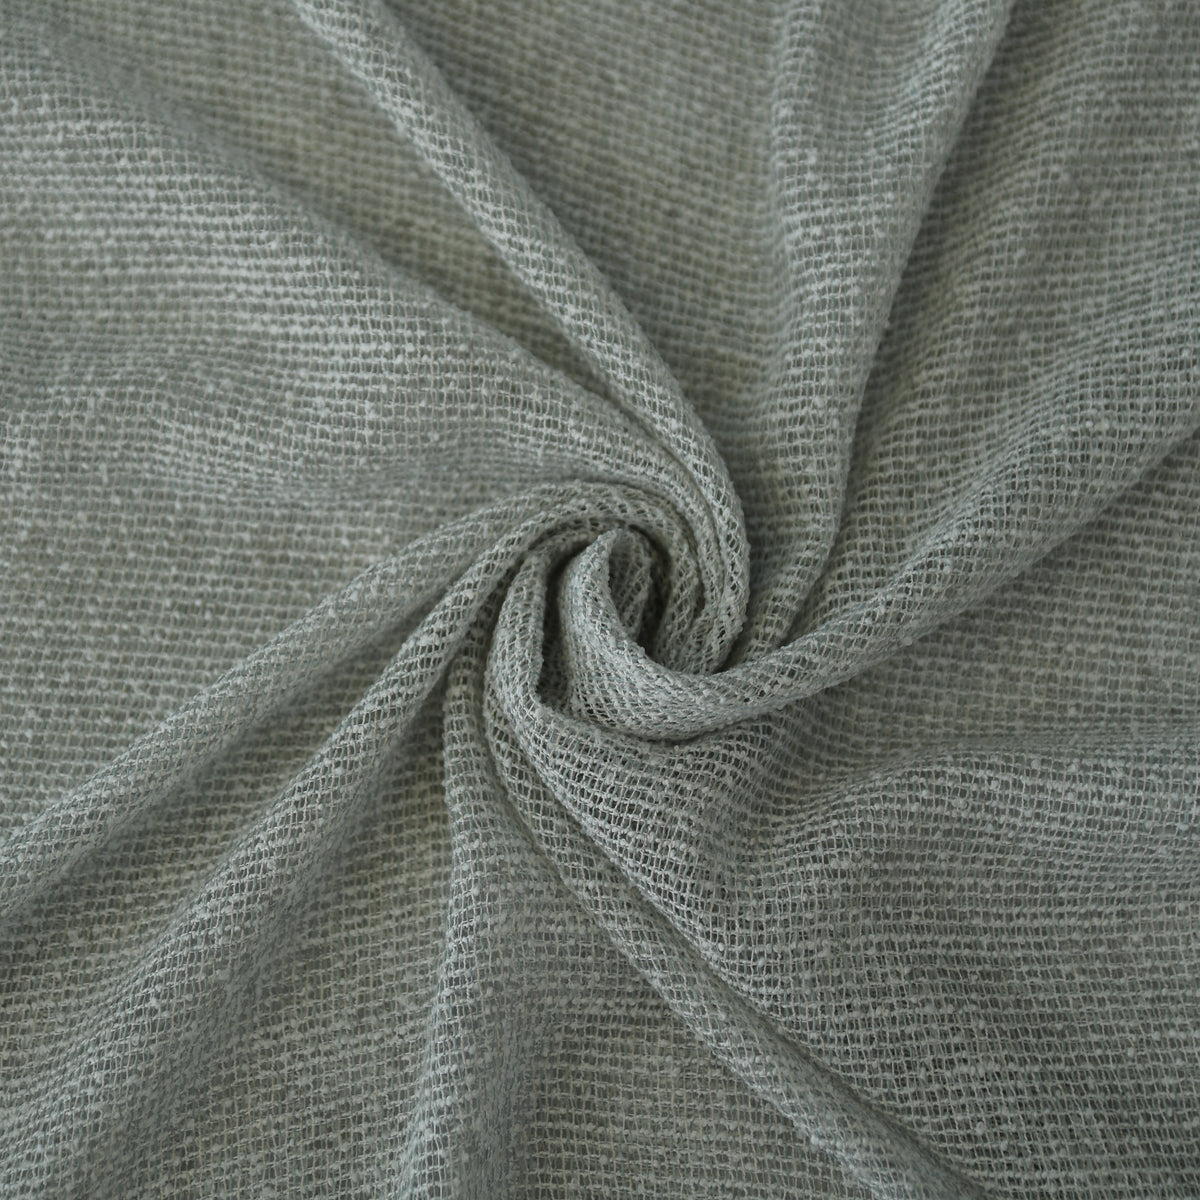 Day curtain light gray netting